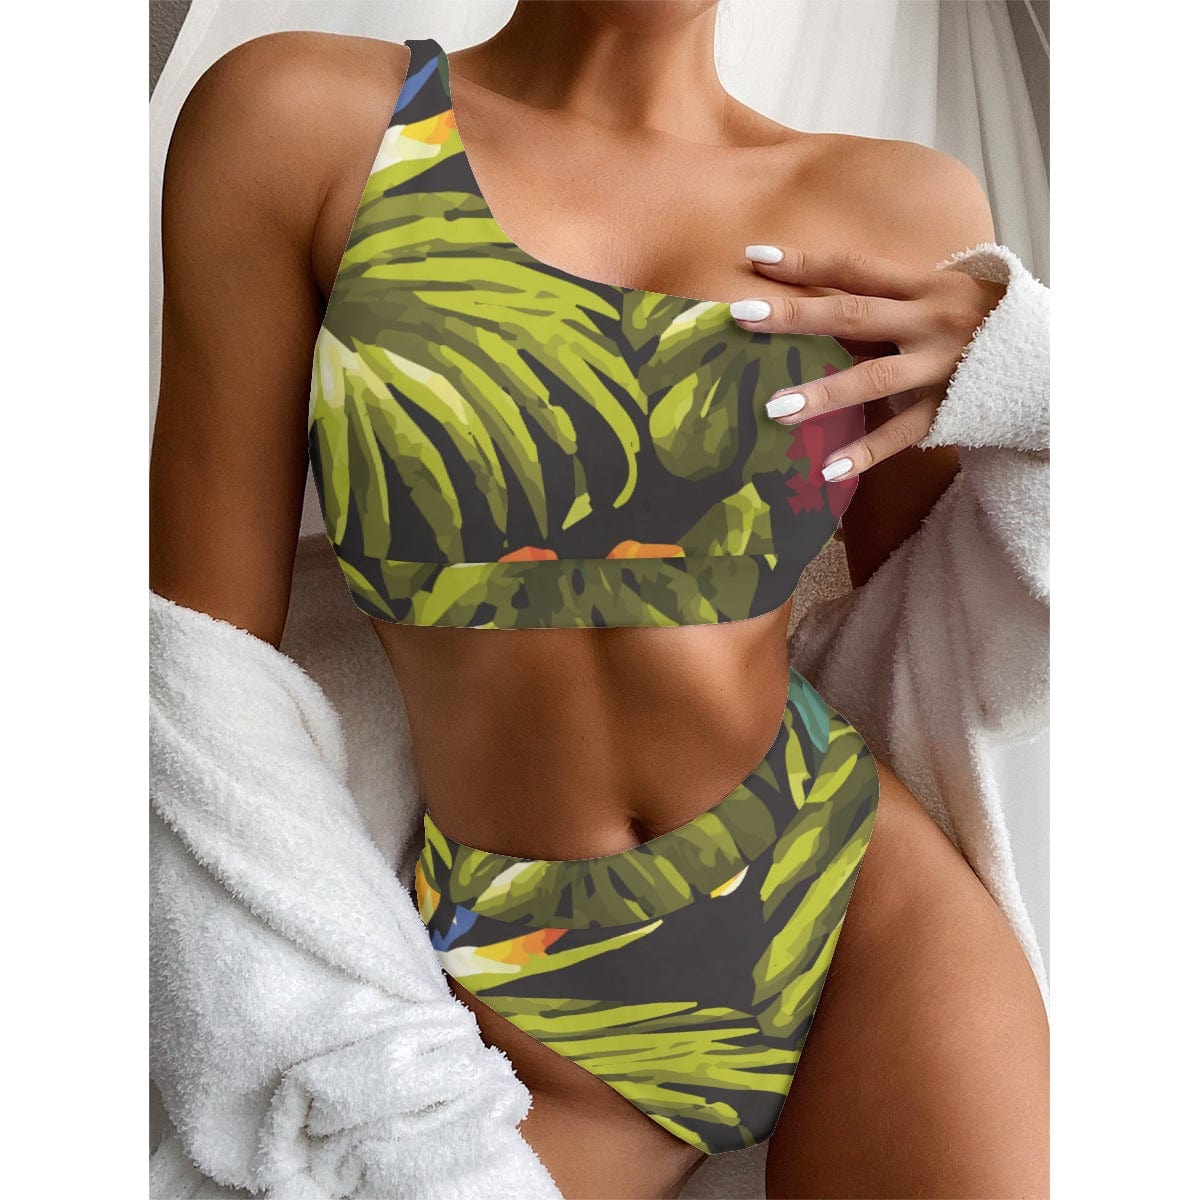 Yoycol 2 Piece 2XL / Tropics Jungle Bikini With Single Shoulder